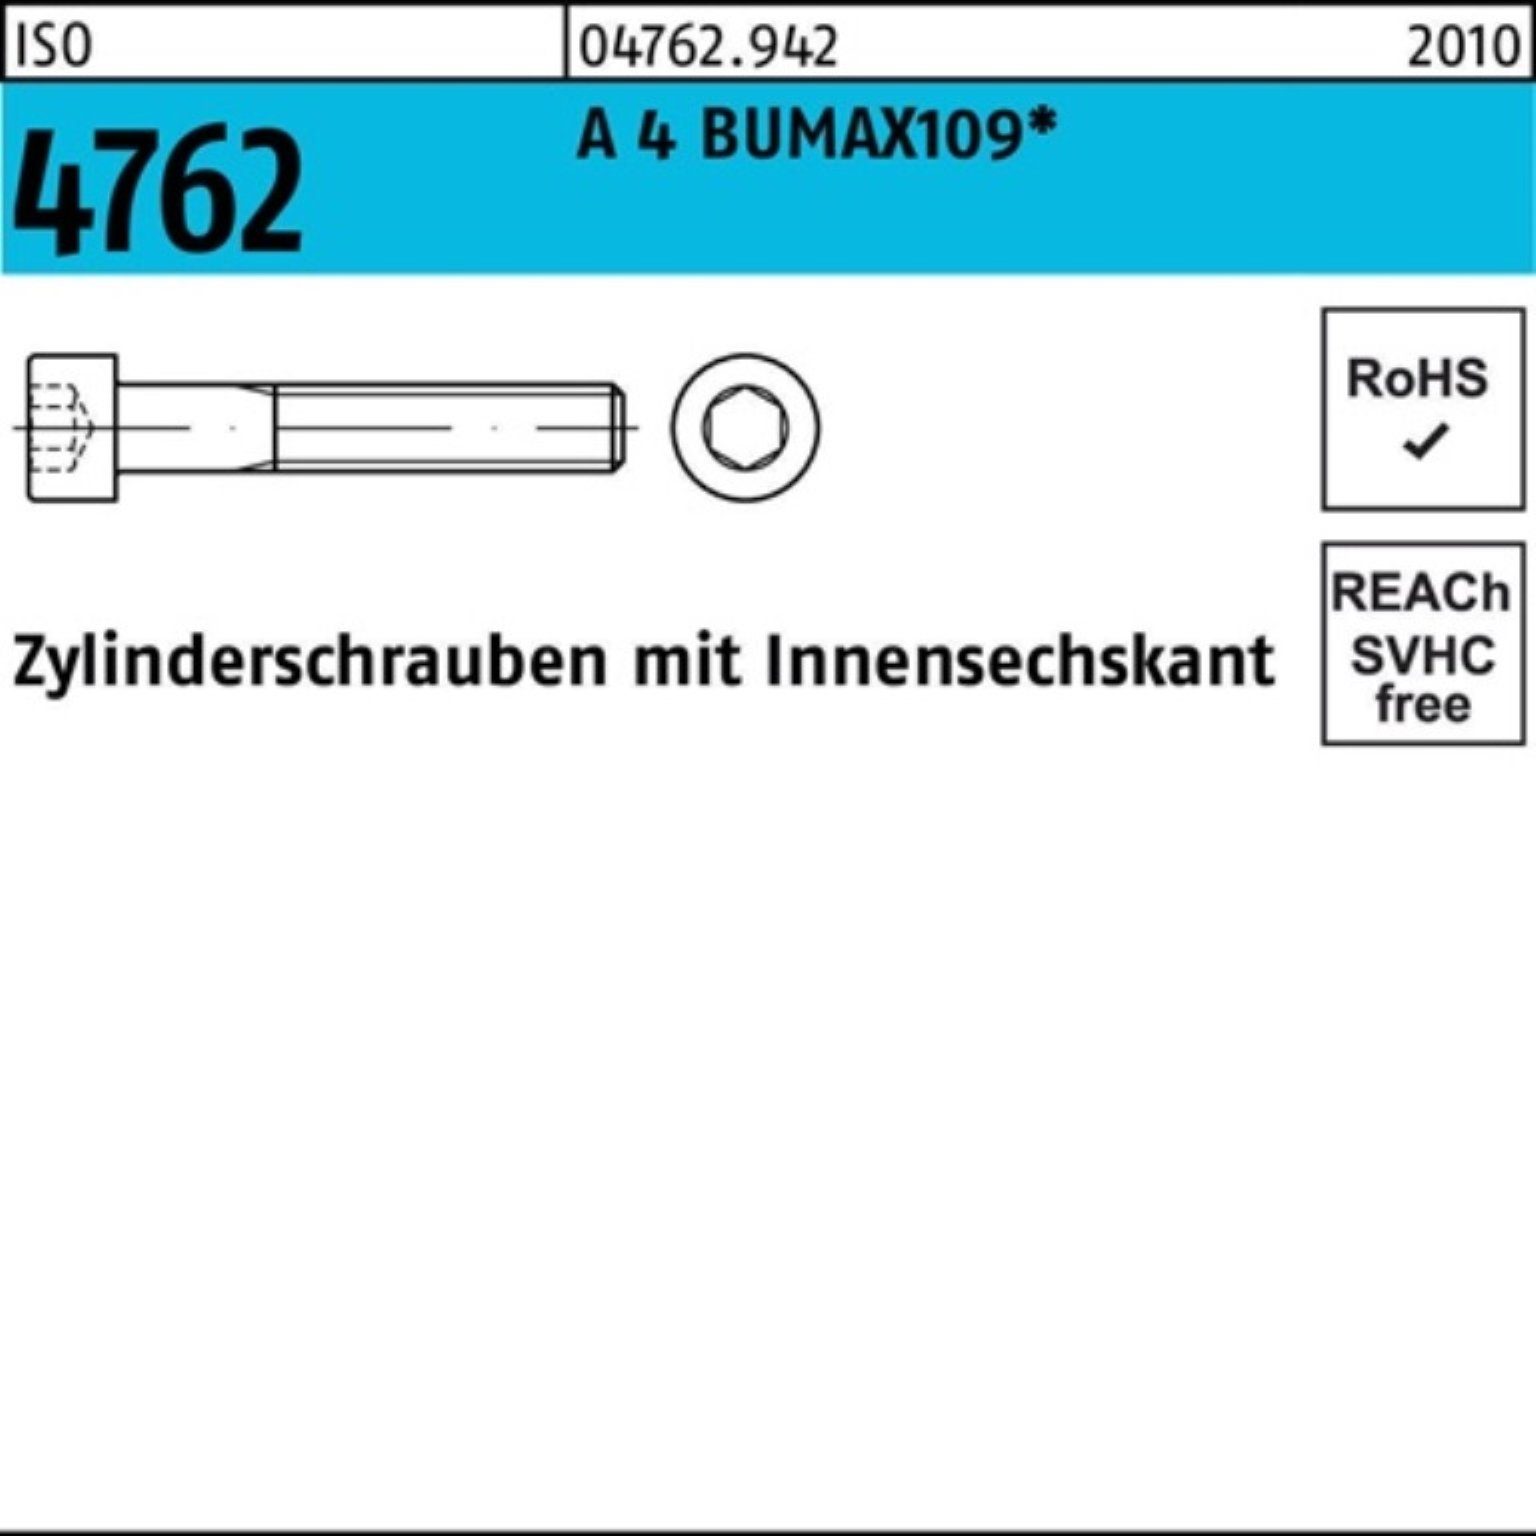 Bufab Zylinderschraube 100er Pack Zylinderschraube ISO 4762 Innen-6kt M8x 60 A 4 BUMAX109 50